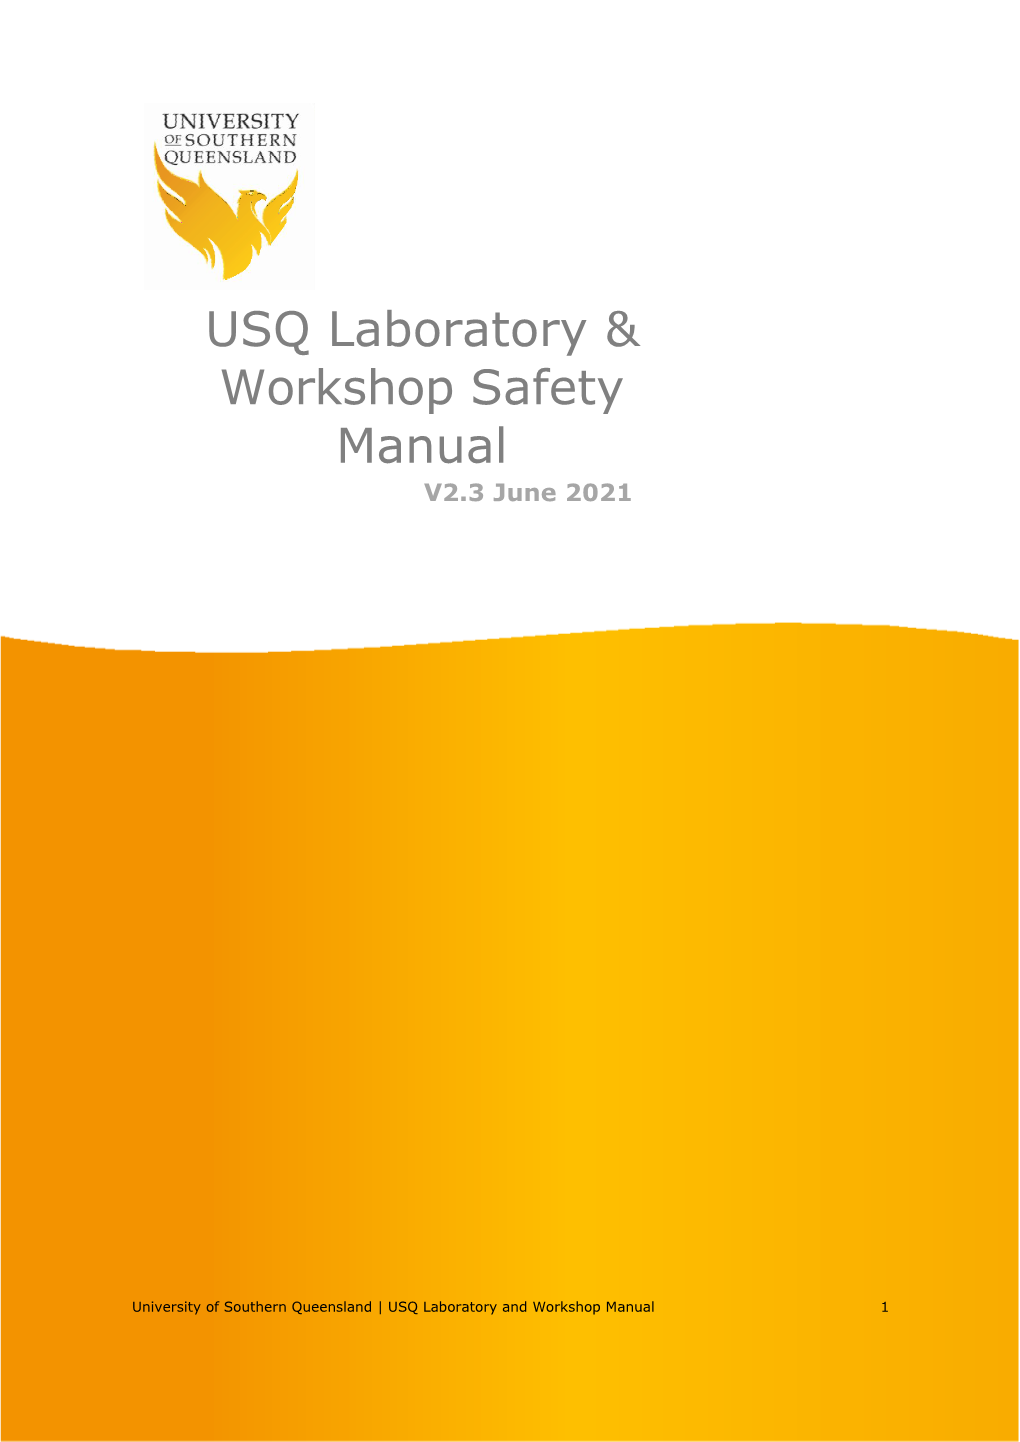 USQ Laboratory & Workshop Safety Manual